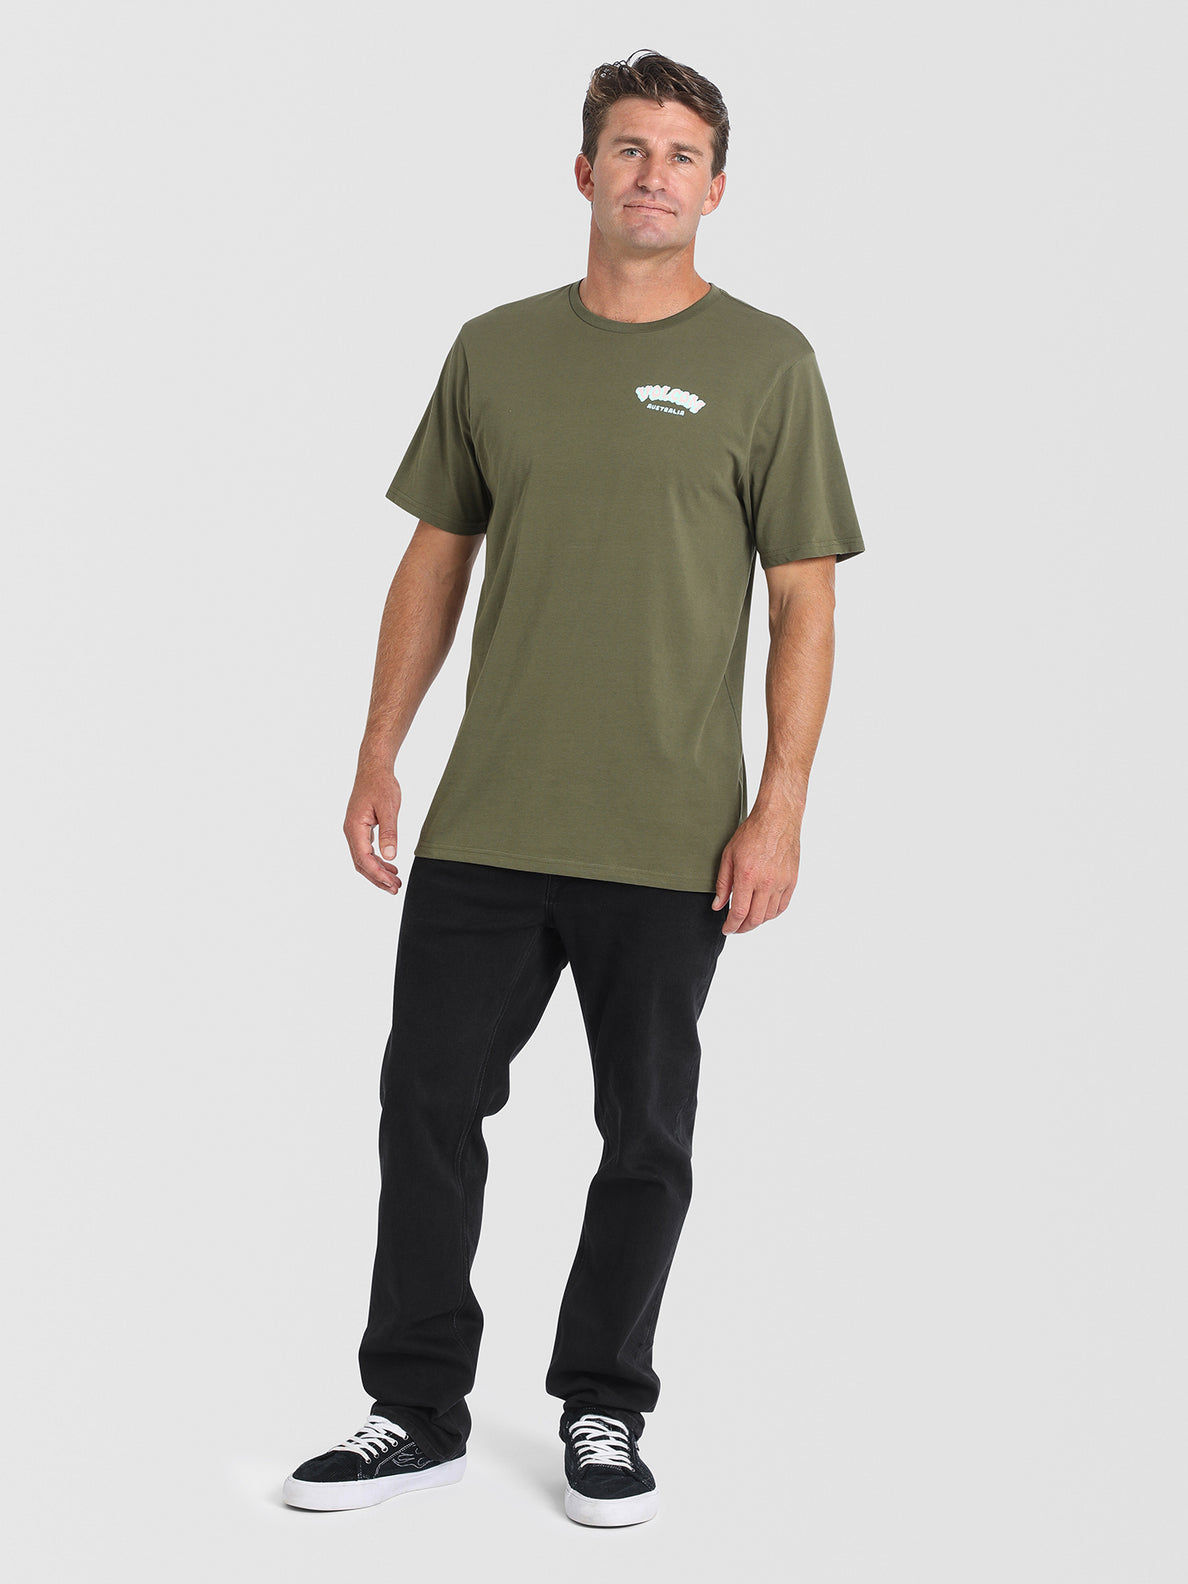 Stoney Island Short Sleeve T-Shirt - Military